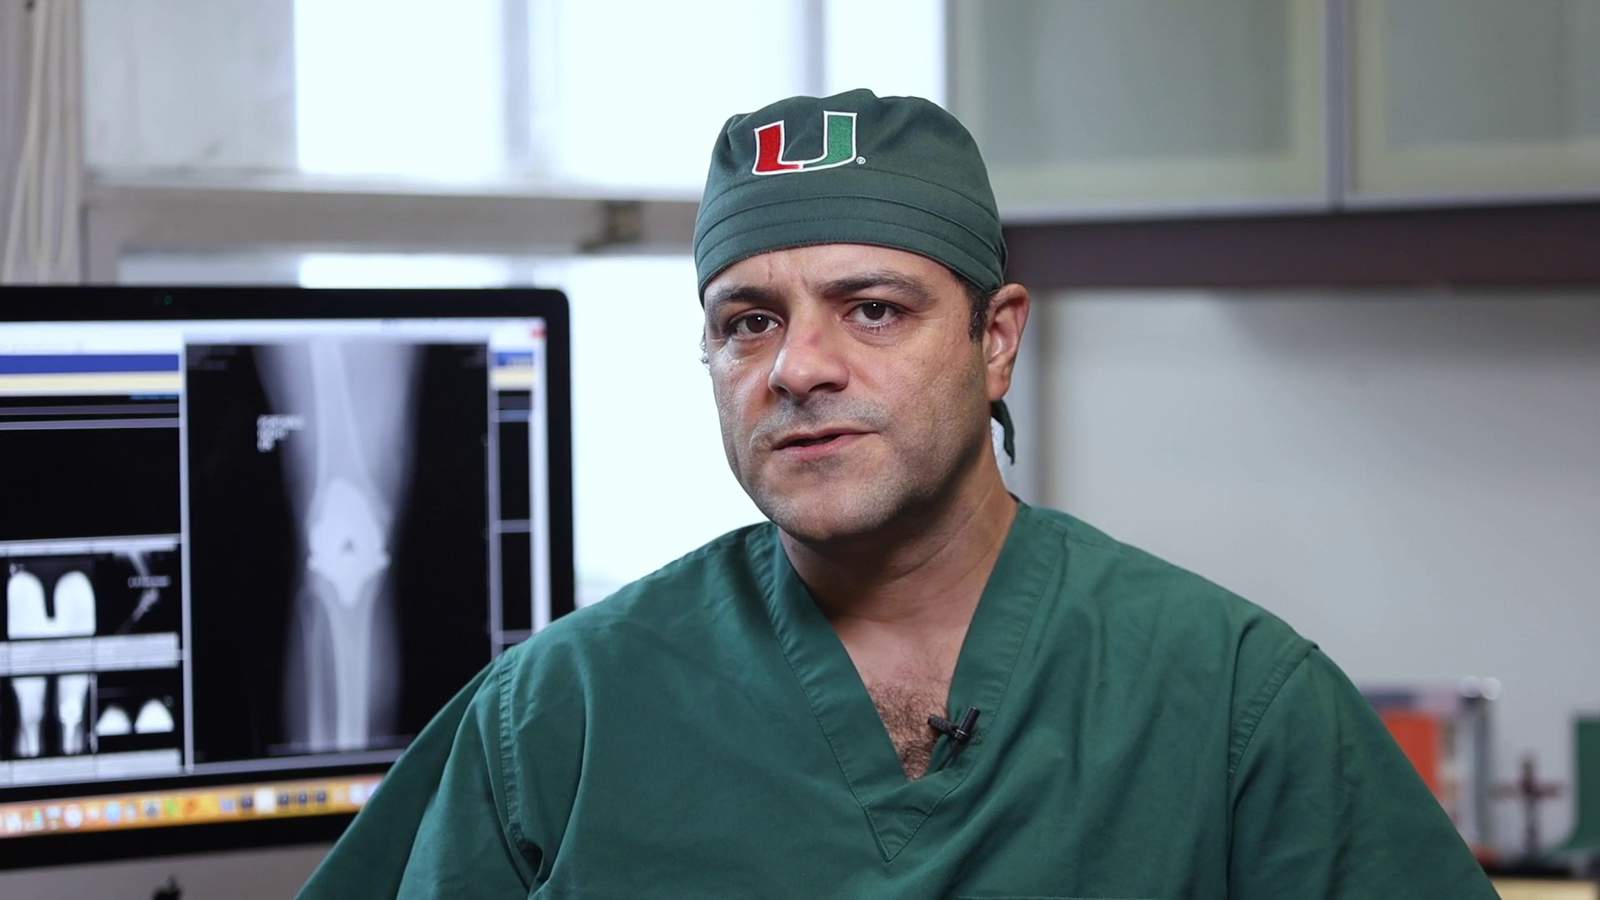 Orthopedic Surgery at University of Miami Health System